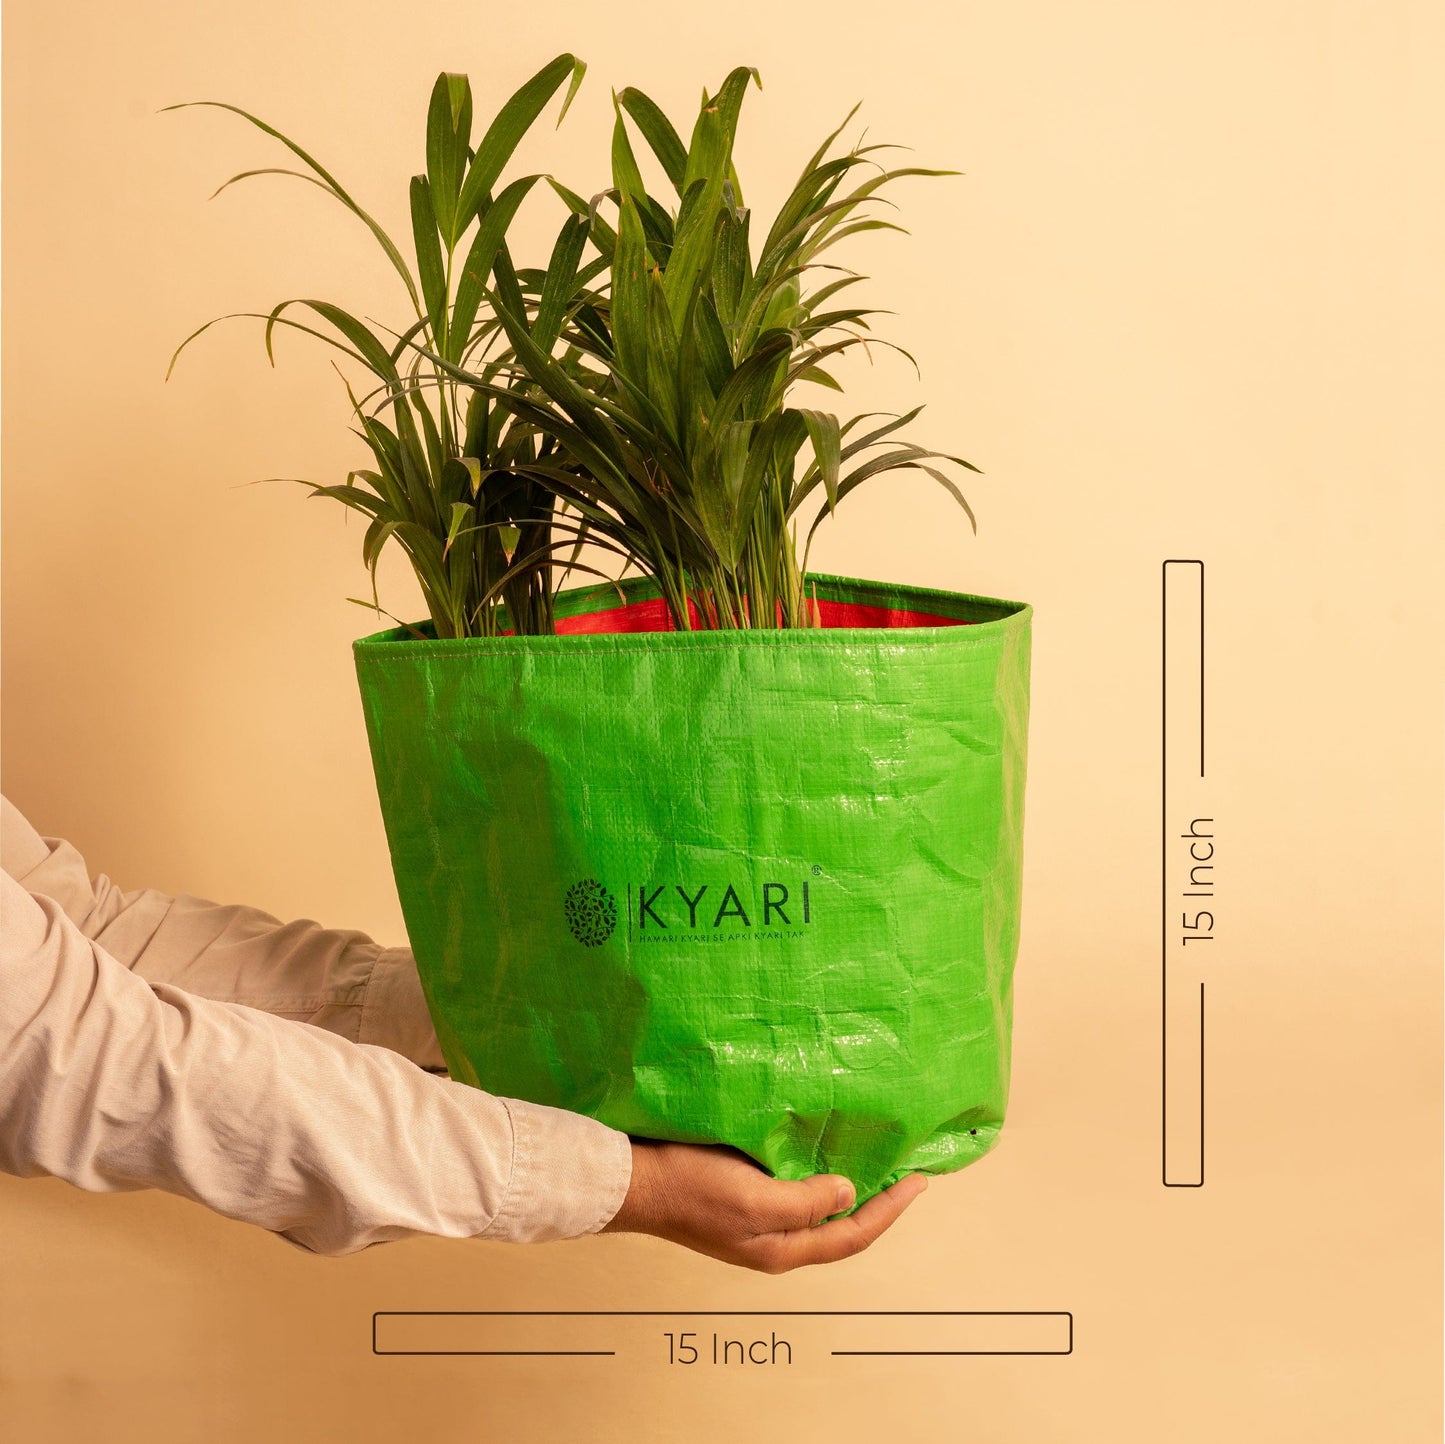 Kyari 260 GSM Grow Bags - 15*15 Inch